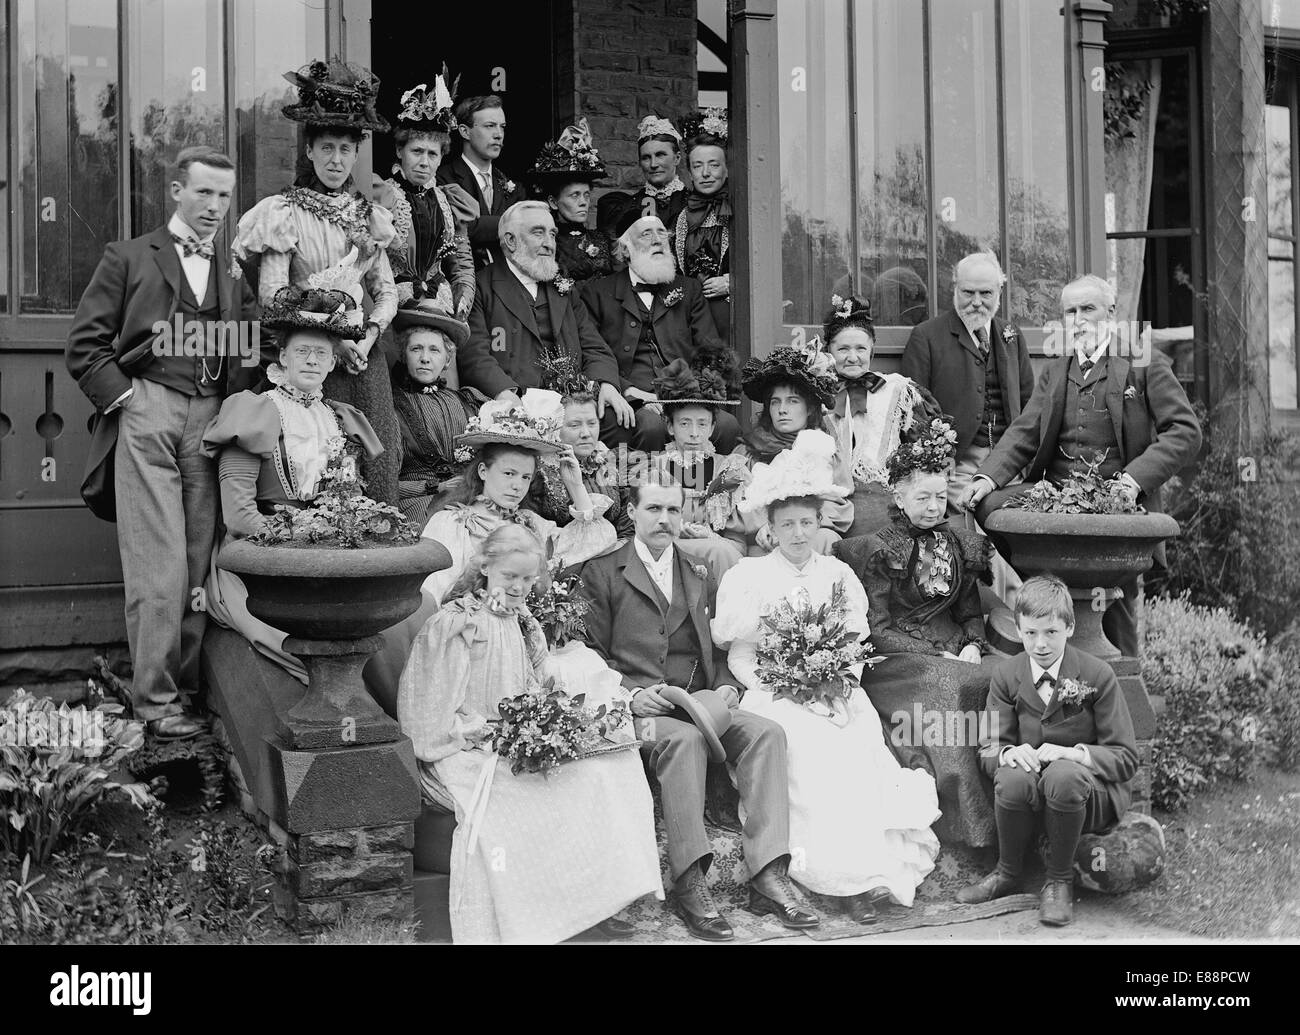 Boda de la familia 1897. Fotografía tomada en Ilkley, Yorkshire, Inglaterra. Foto de stock